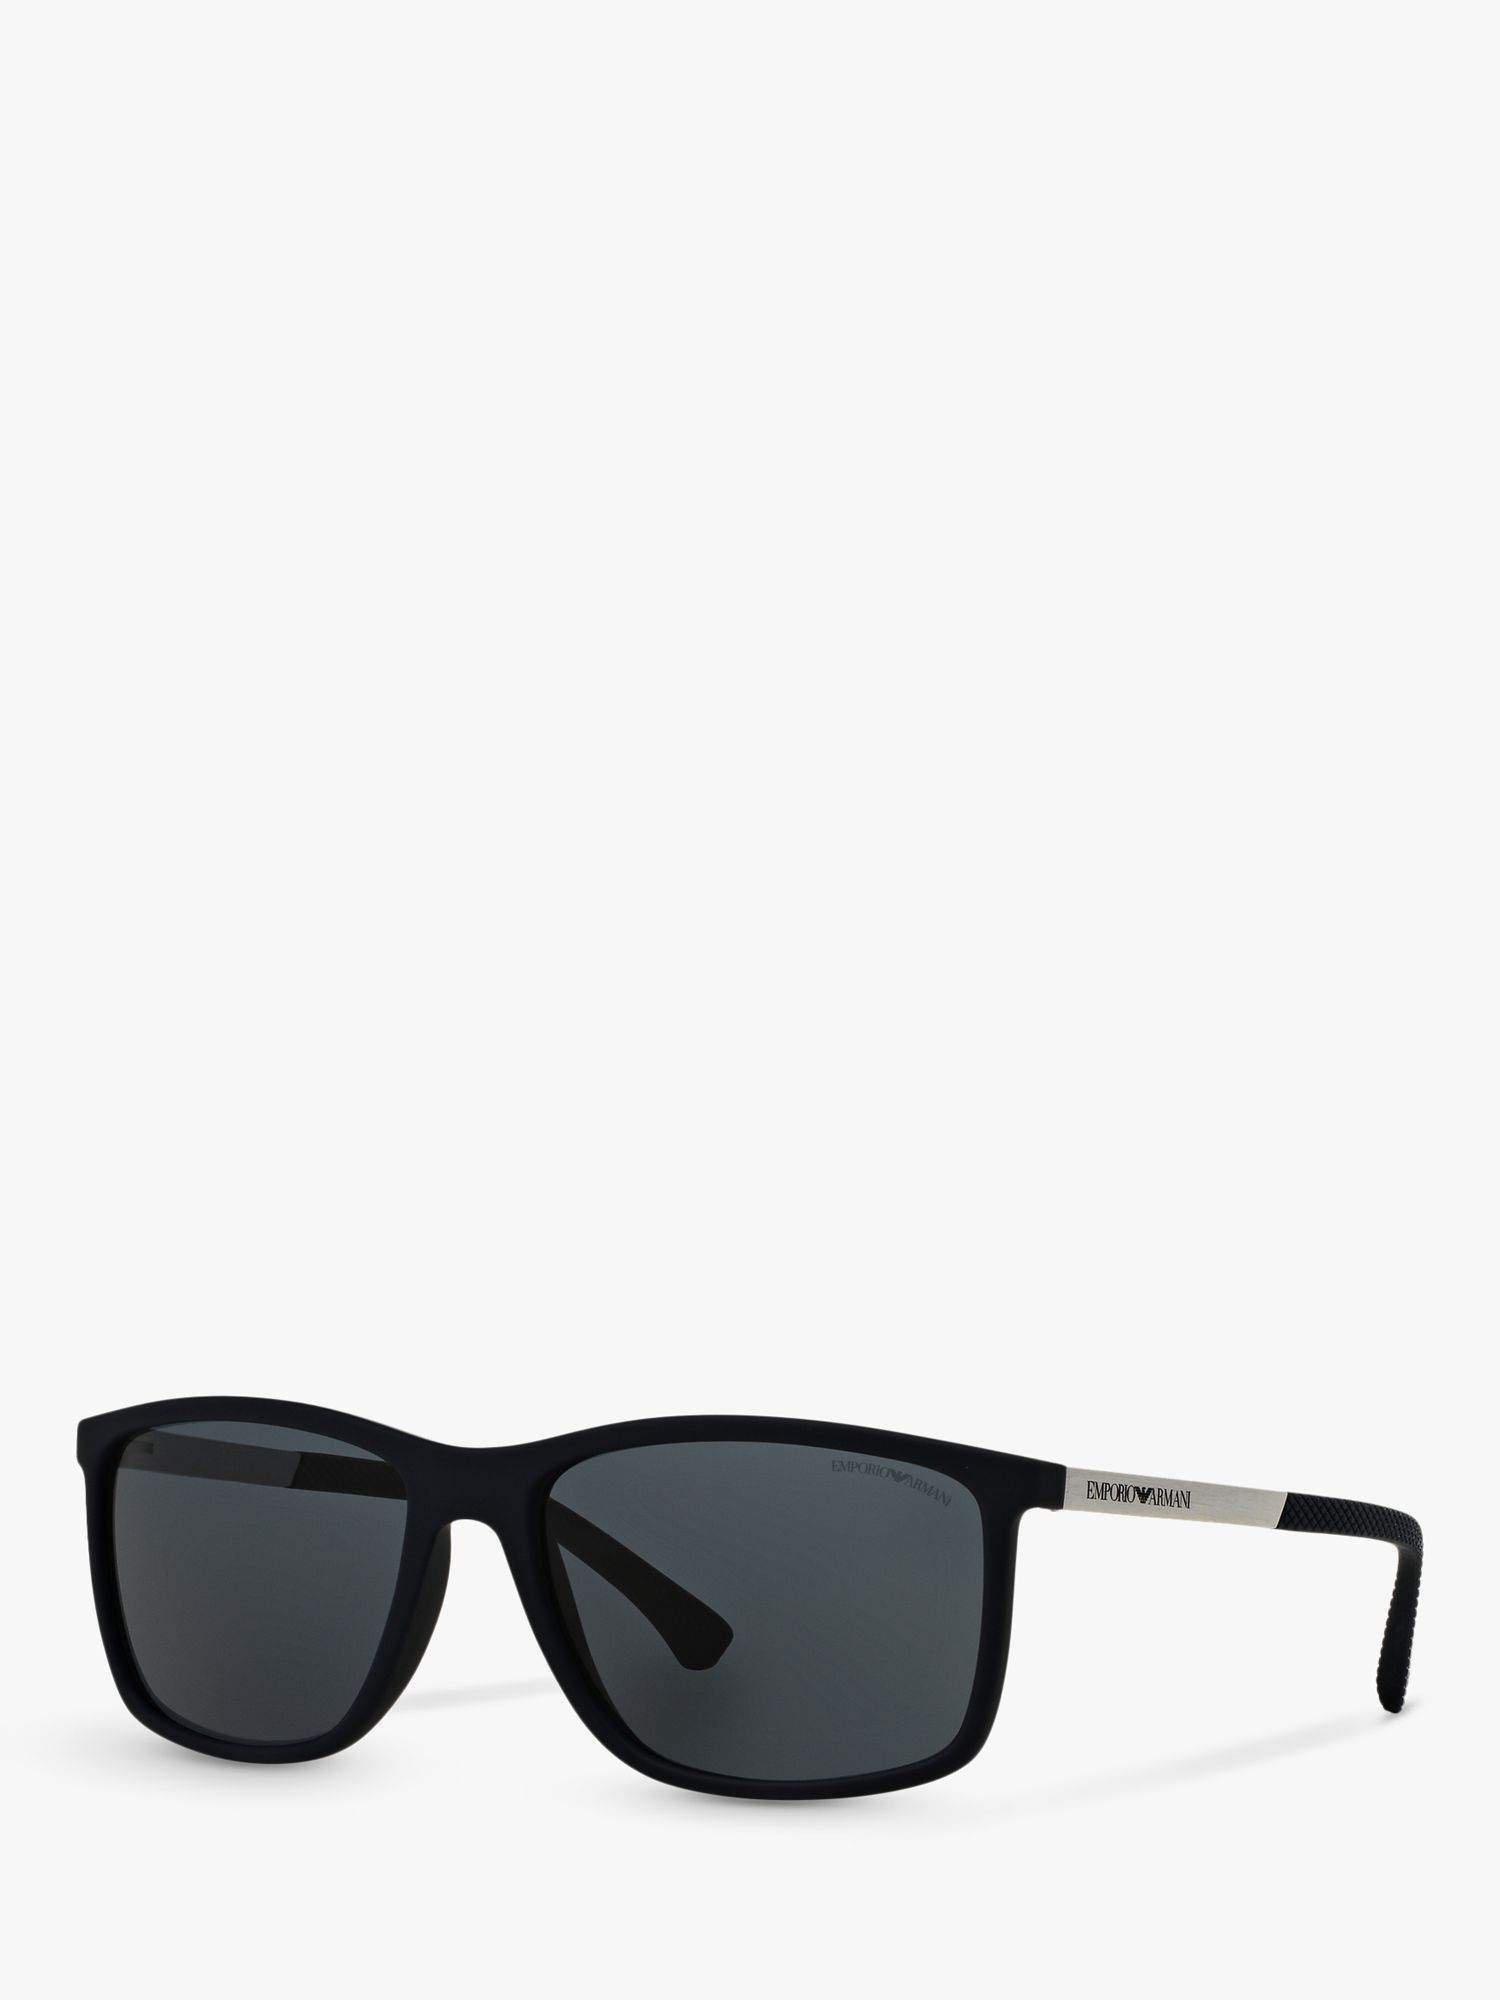 Emporio Armani EA4058 Men's Rectangular Sunglasses, Midnight/Black at John  Lewis & Partners